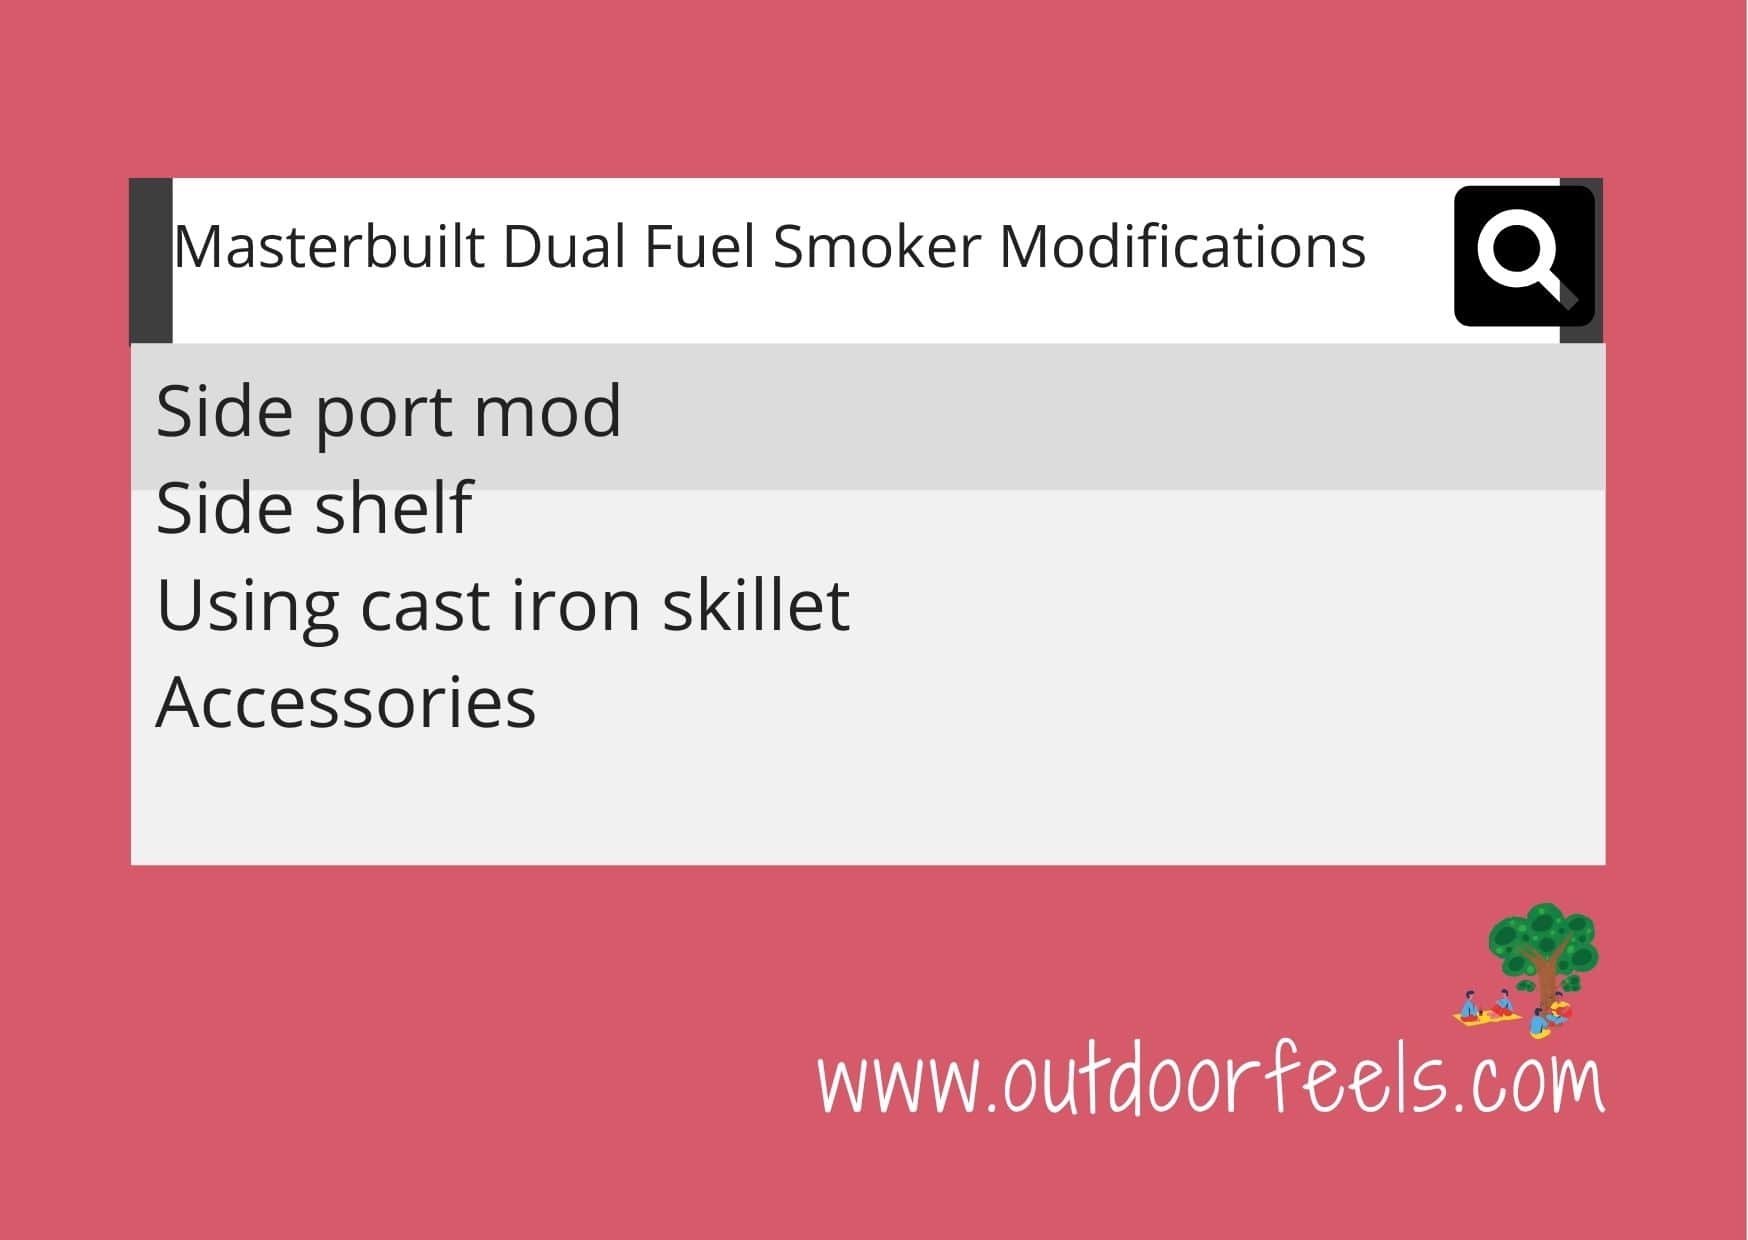 Masterbuilt Dual Fuel Smoker Modifications_Feature Image-min